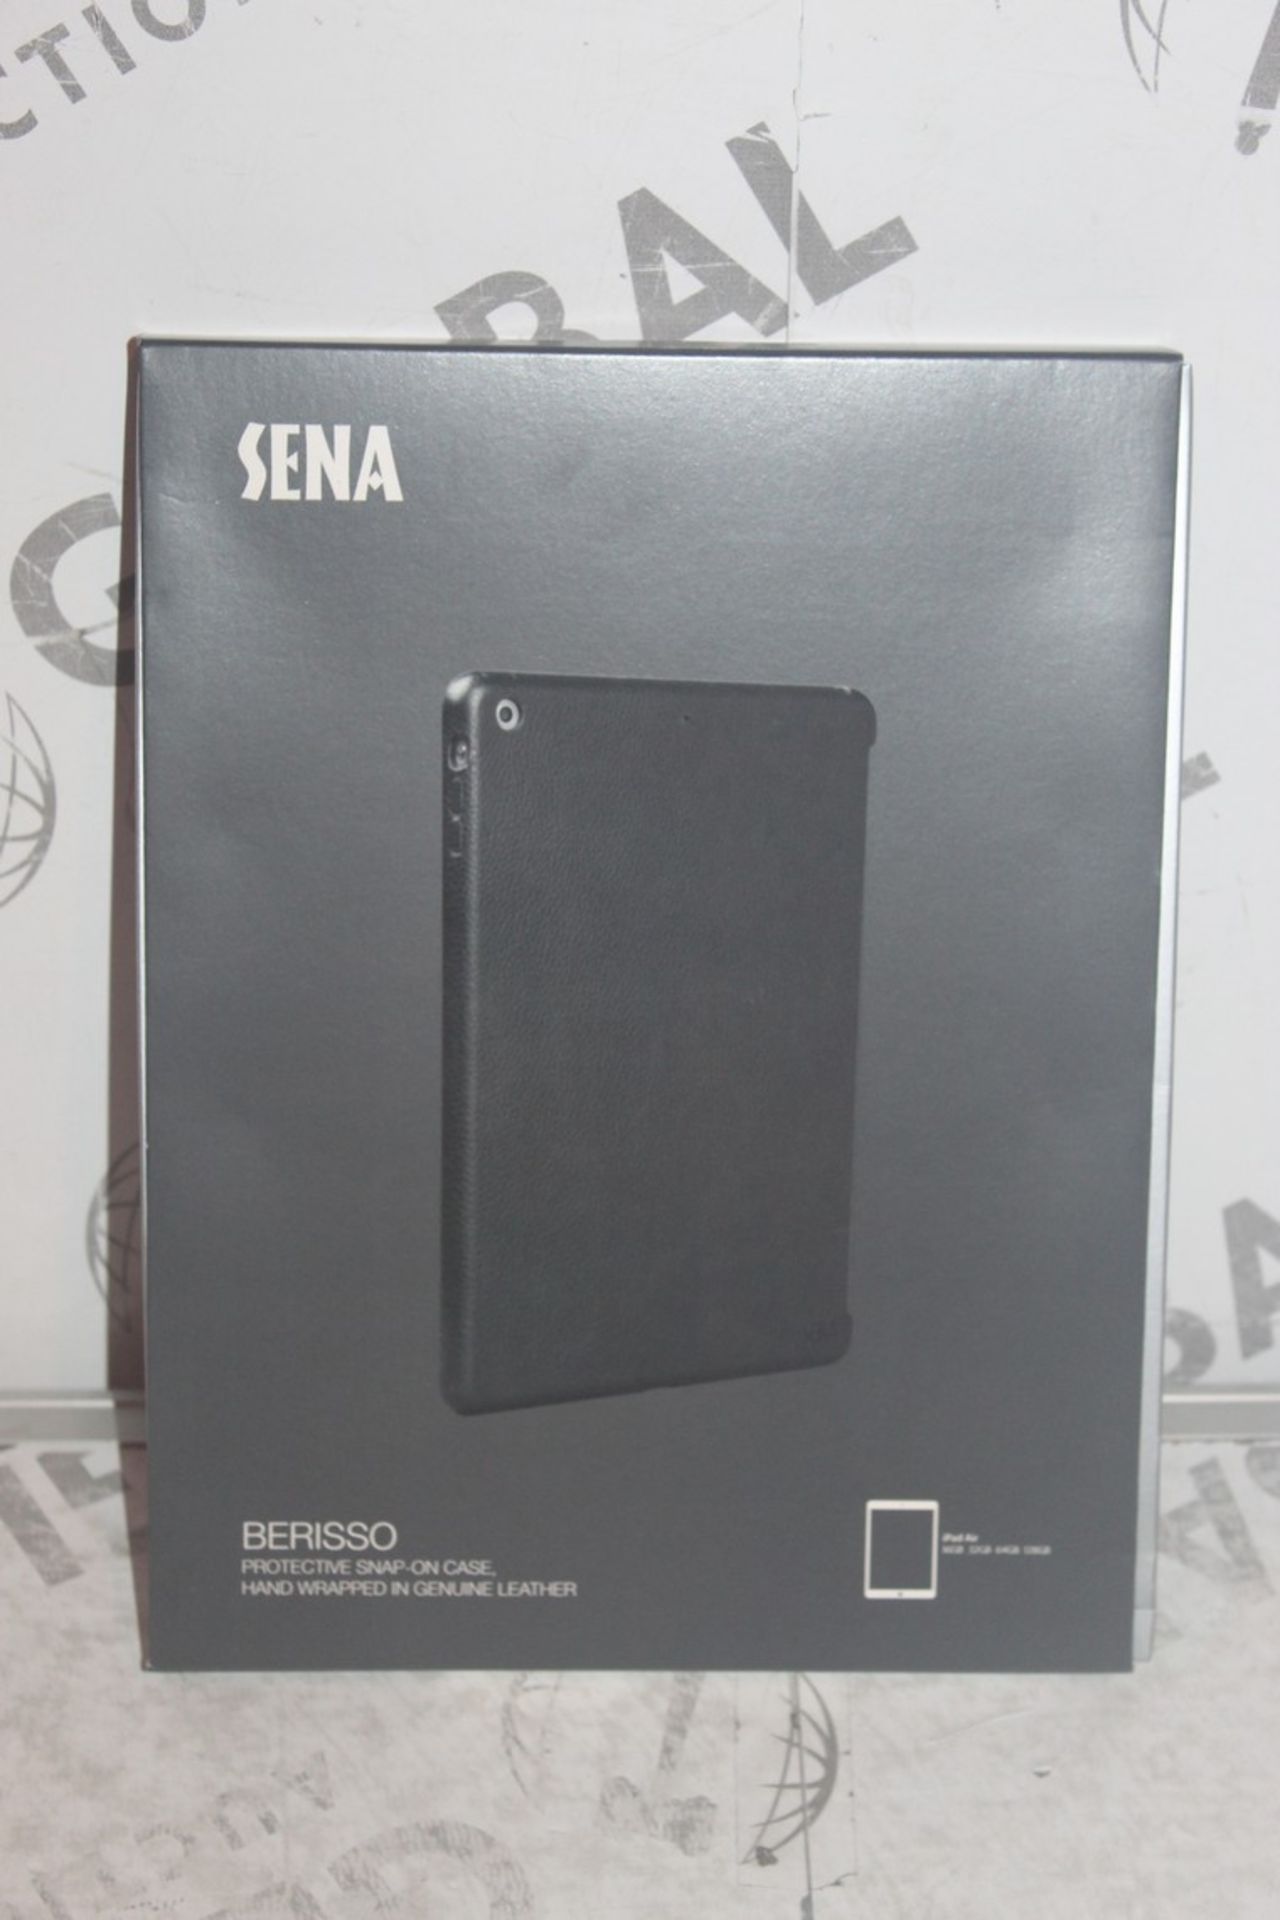 Boxed Sena Berisso Leather Clip On iPad Air Case RRP £55